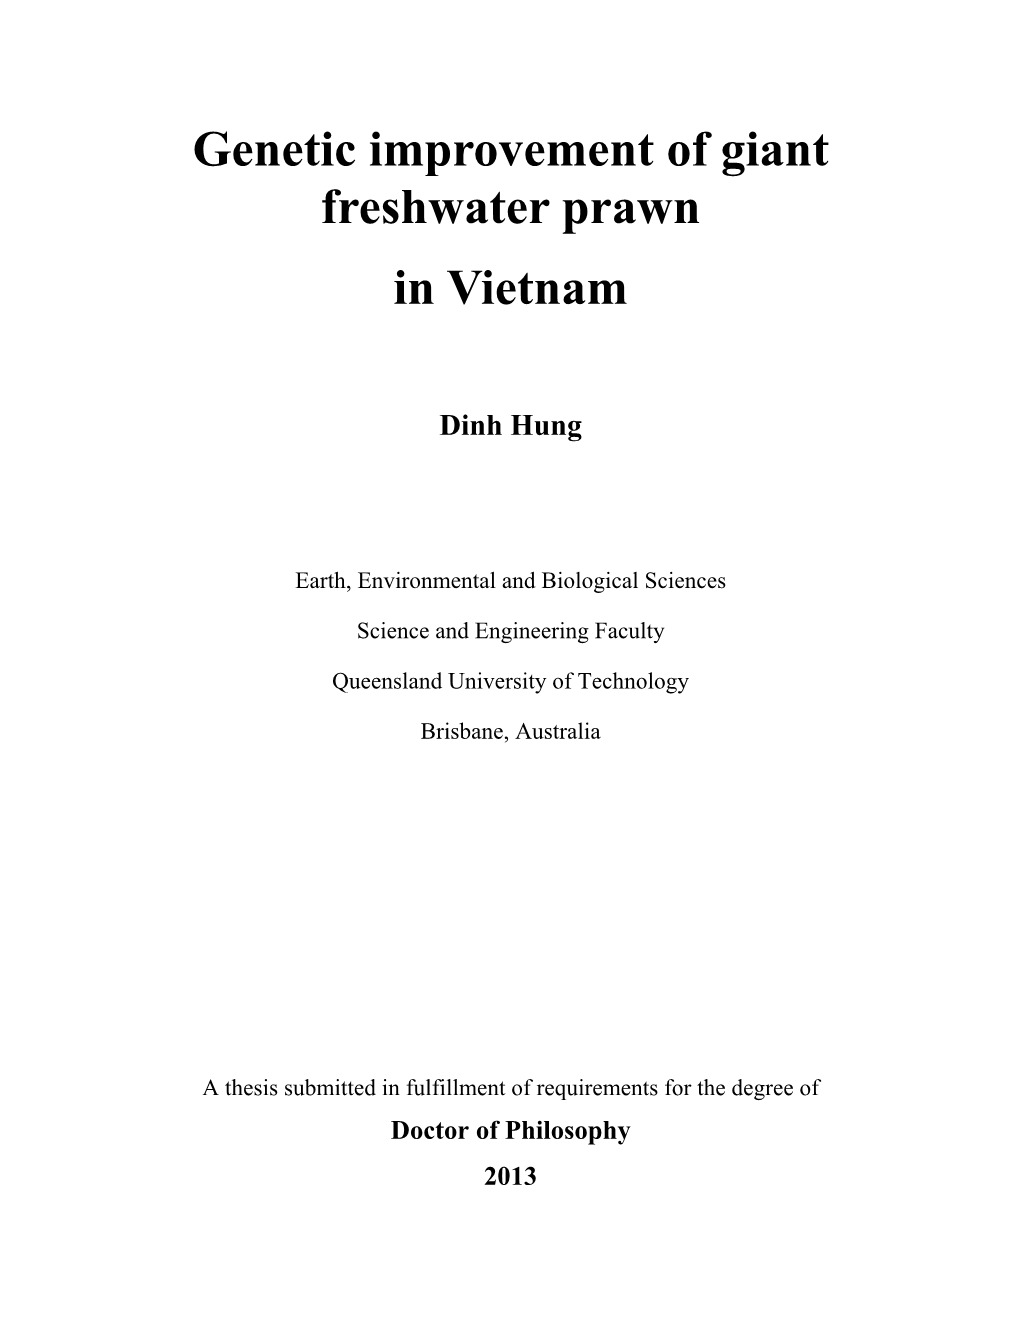 Genetic Improvement of Giant Freshwater Prawn in Vietnam